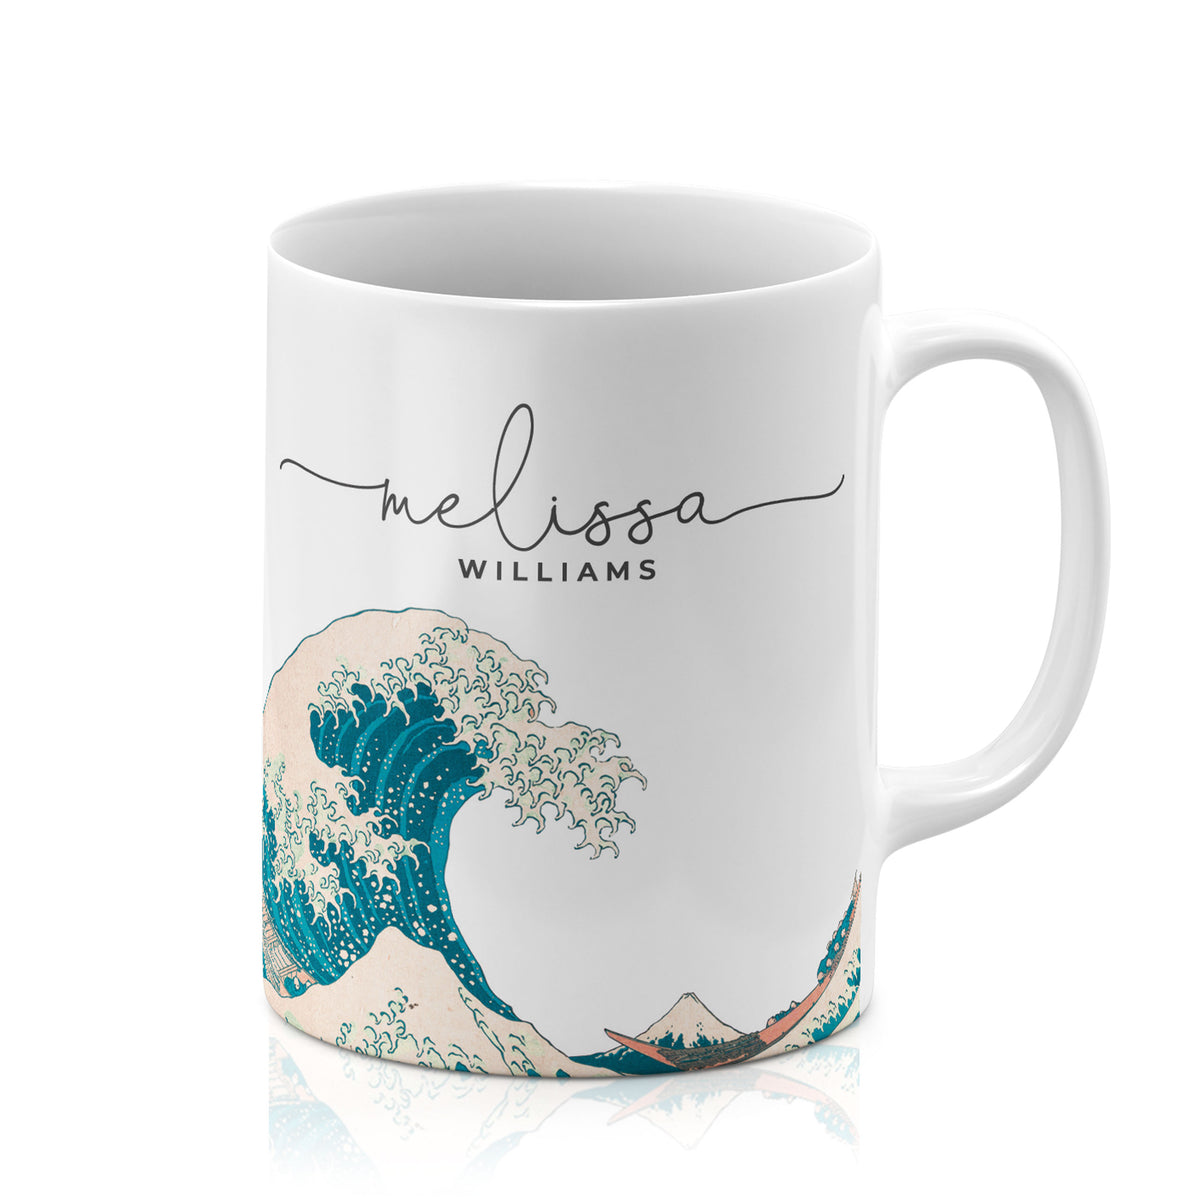 Personalised Ceramic Mug with Name Initials Text The Great Wave off Kanagawa by Hokusai